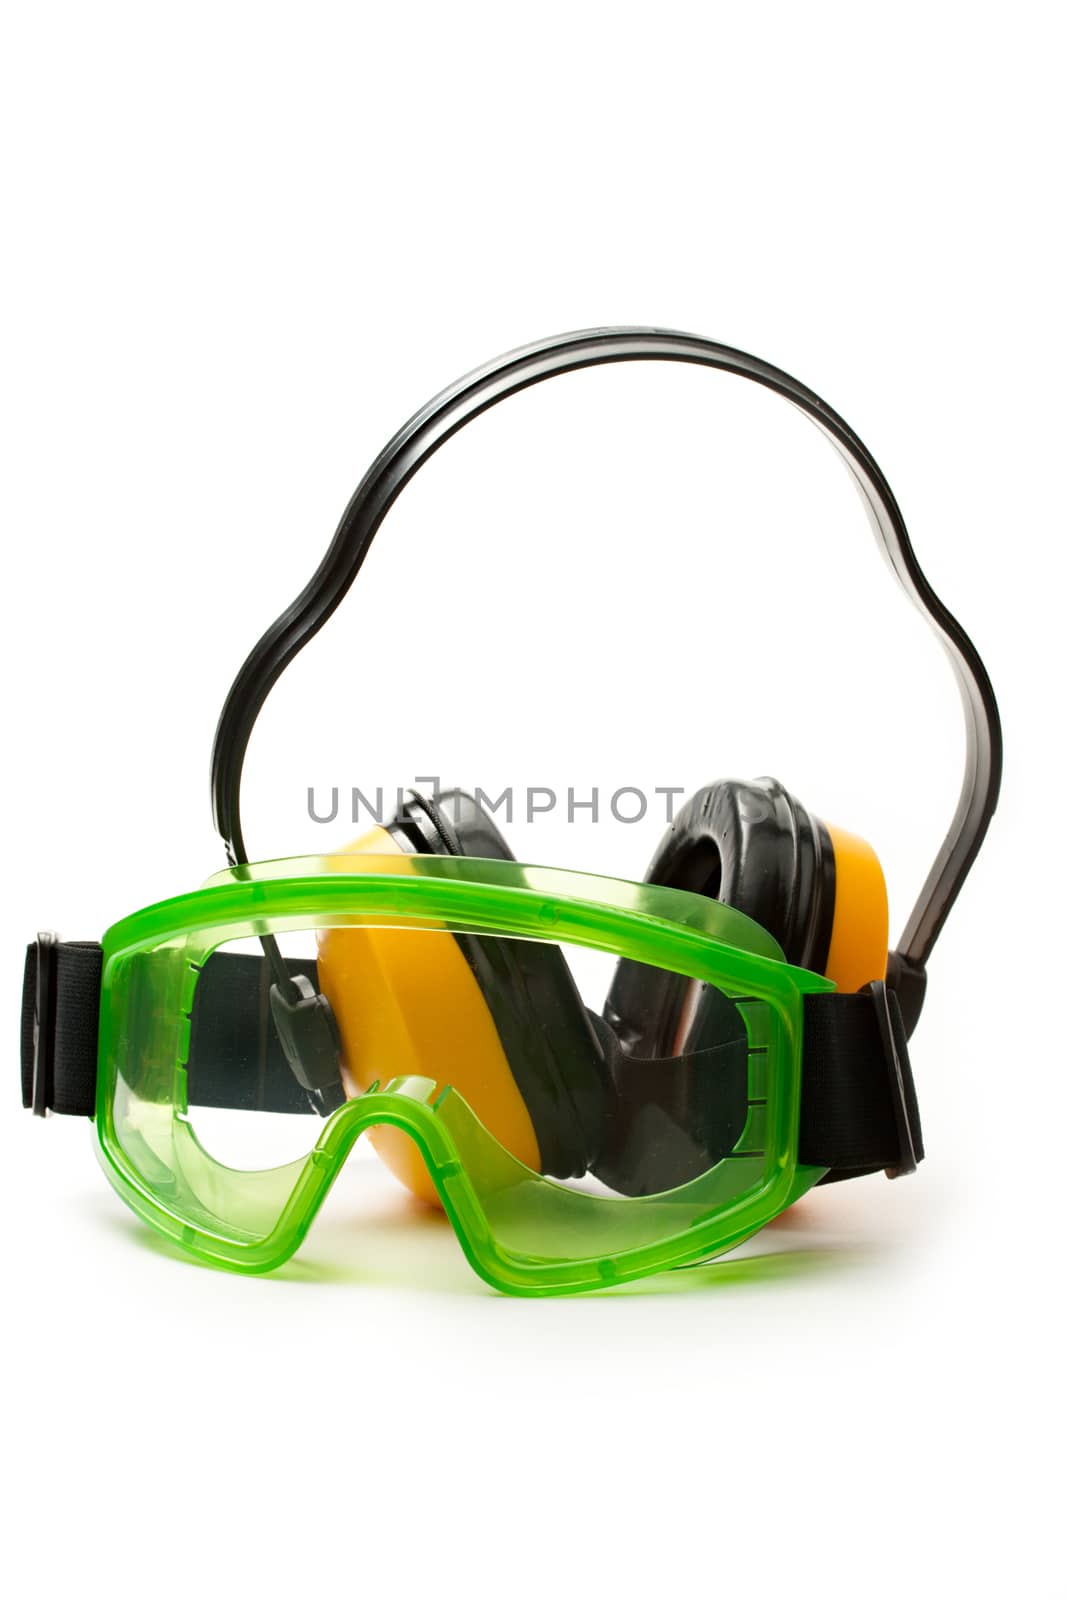 Green goggles with earphones by Garsya